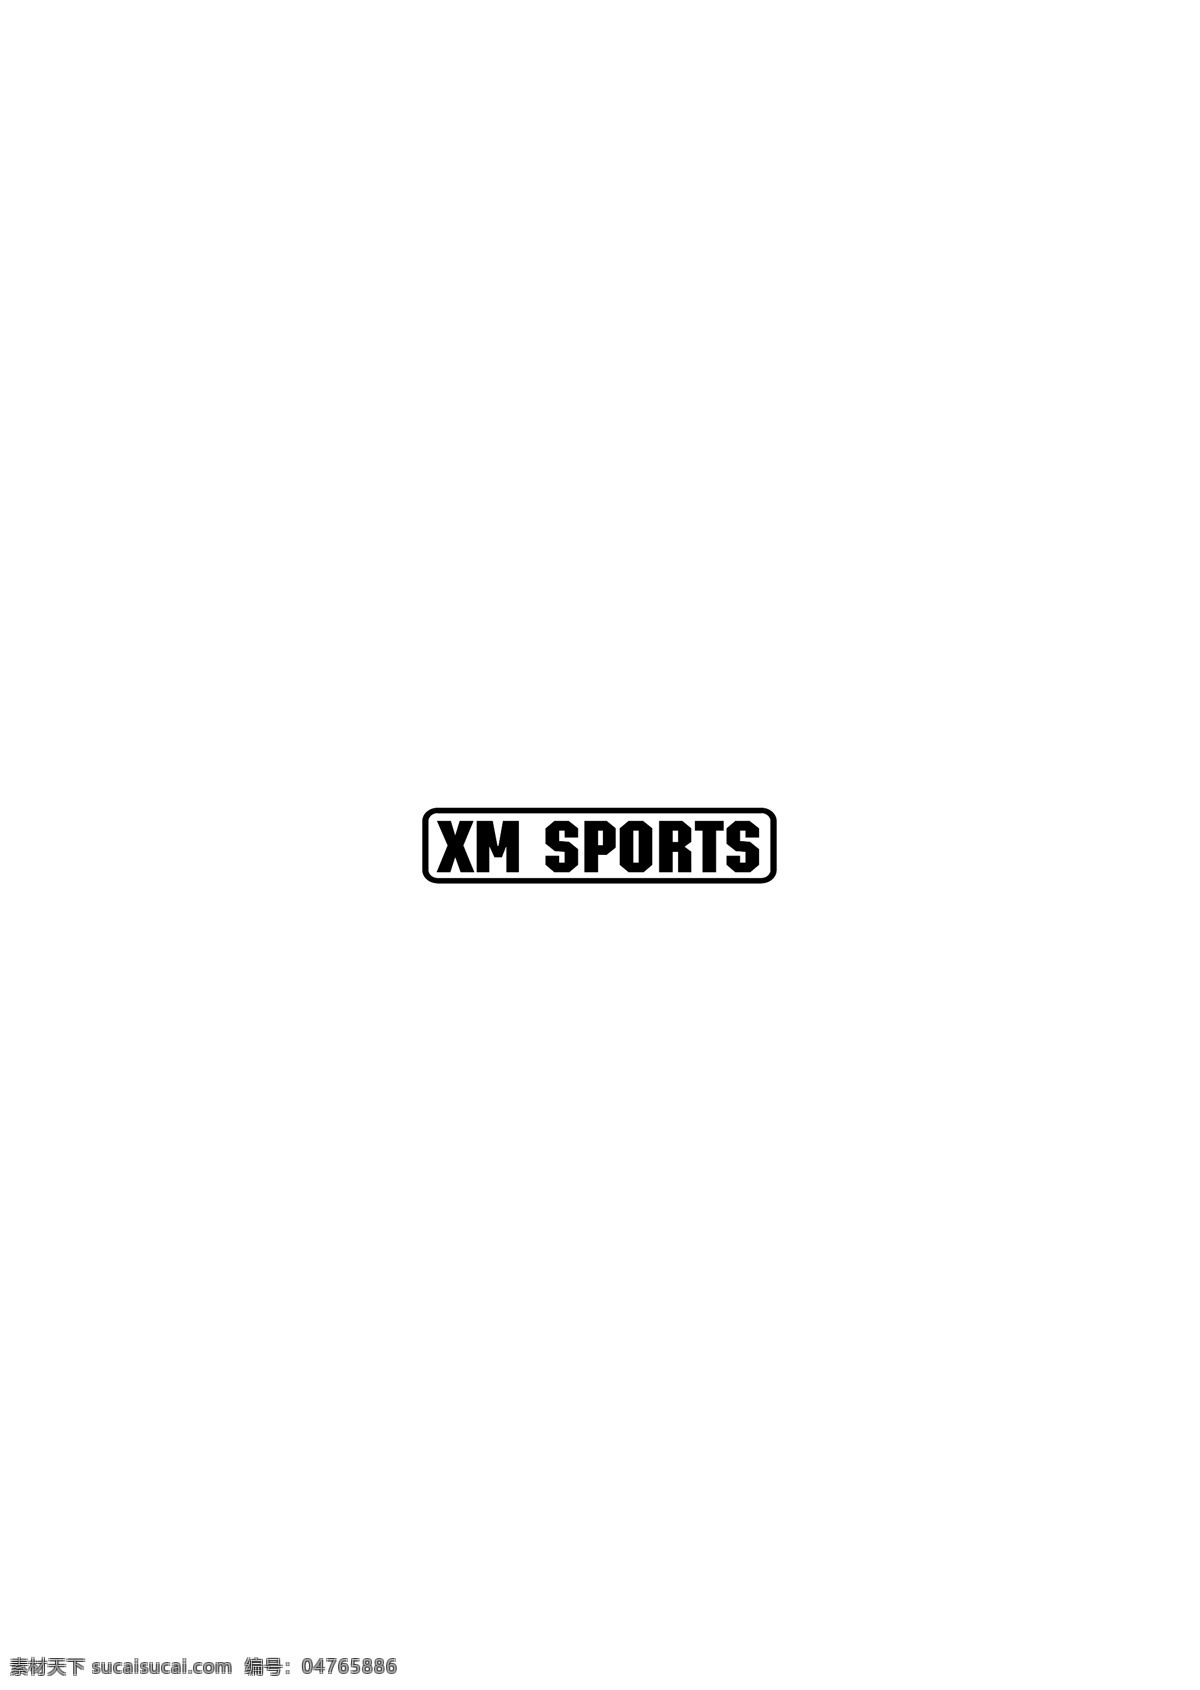 xm sports logo 设计欣赏 标志设计 欣赏 矢量下载 网页矢量 商业矢量 logo大全 红色